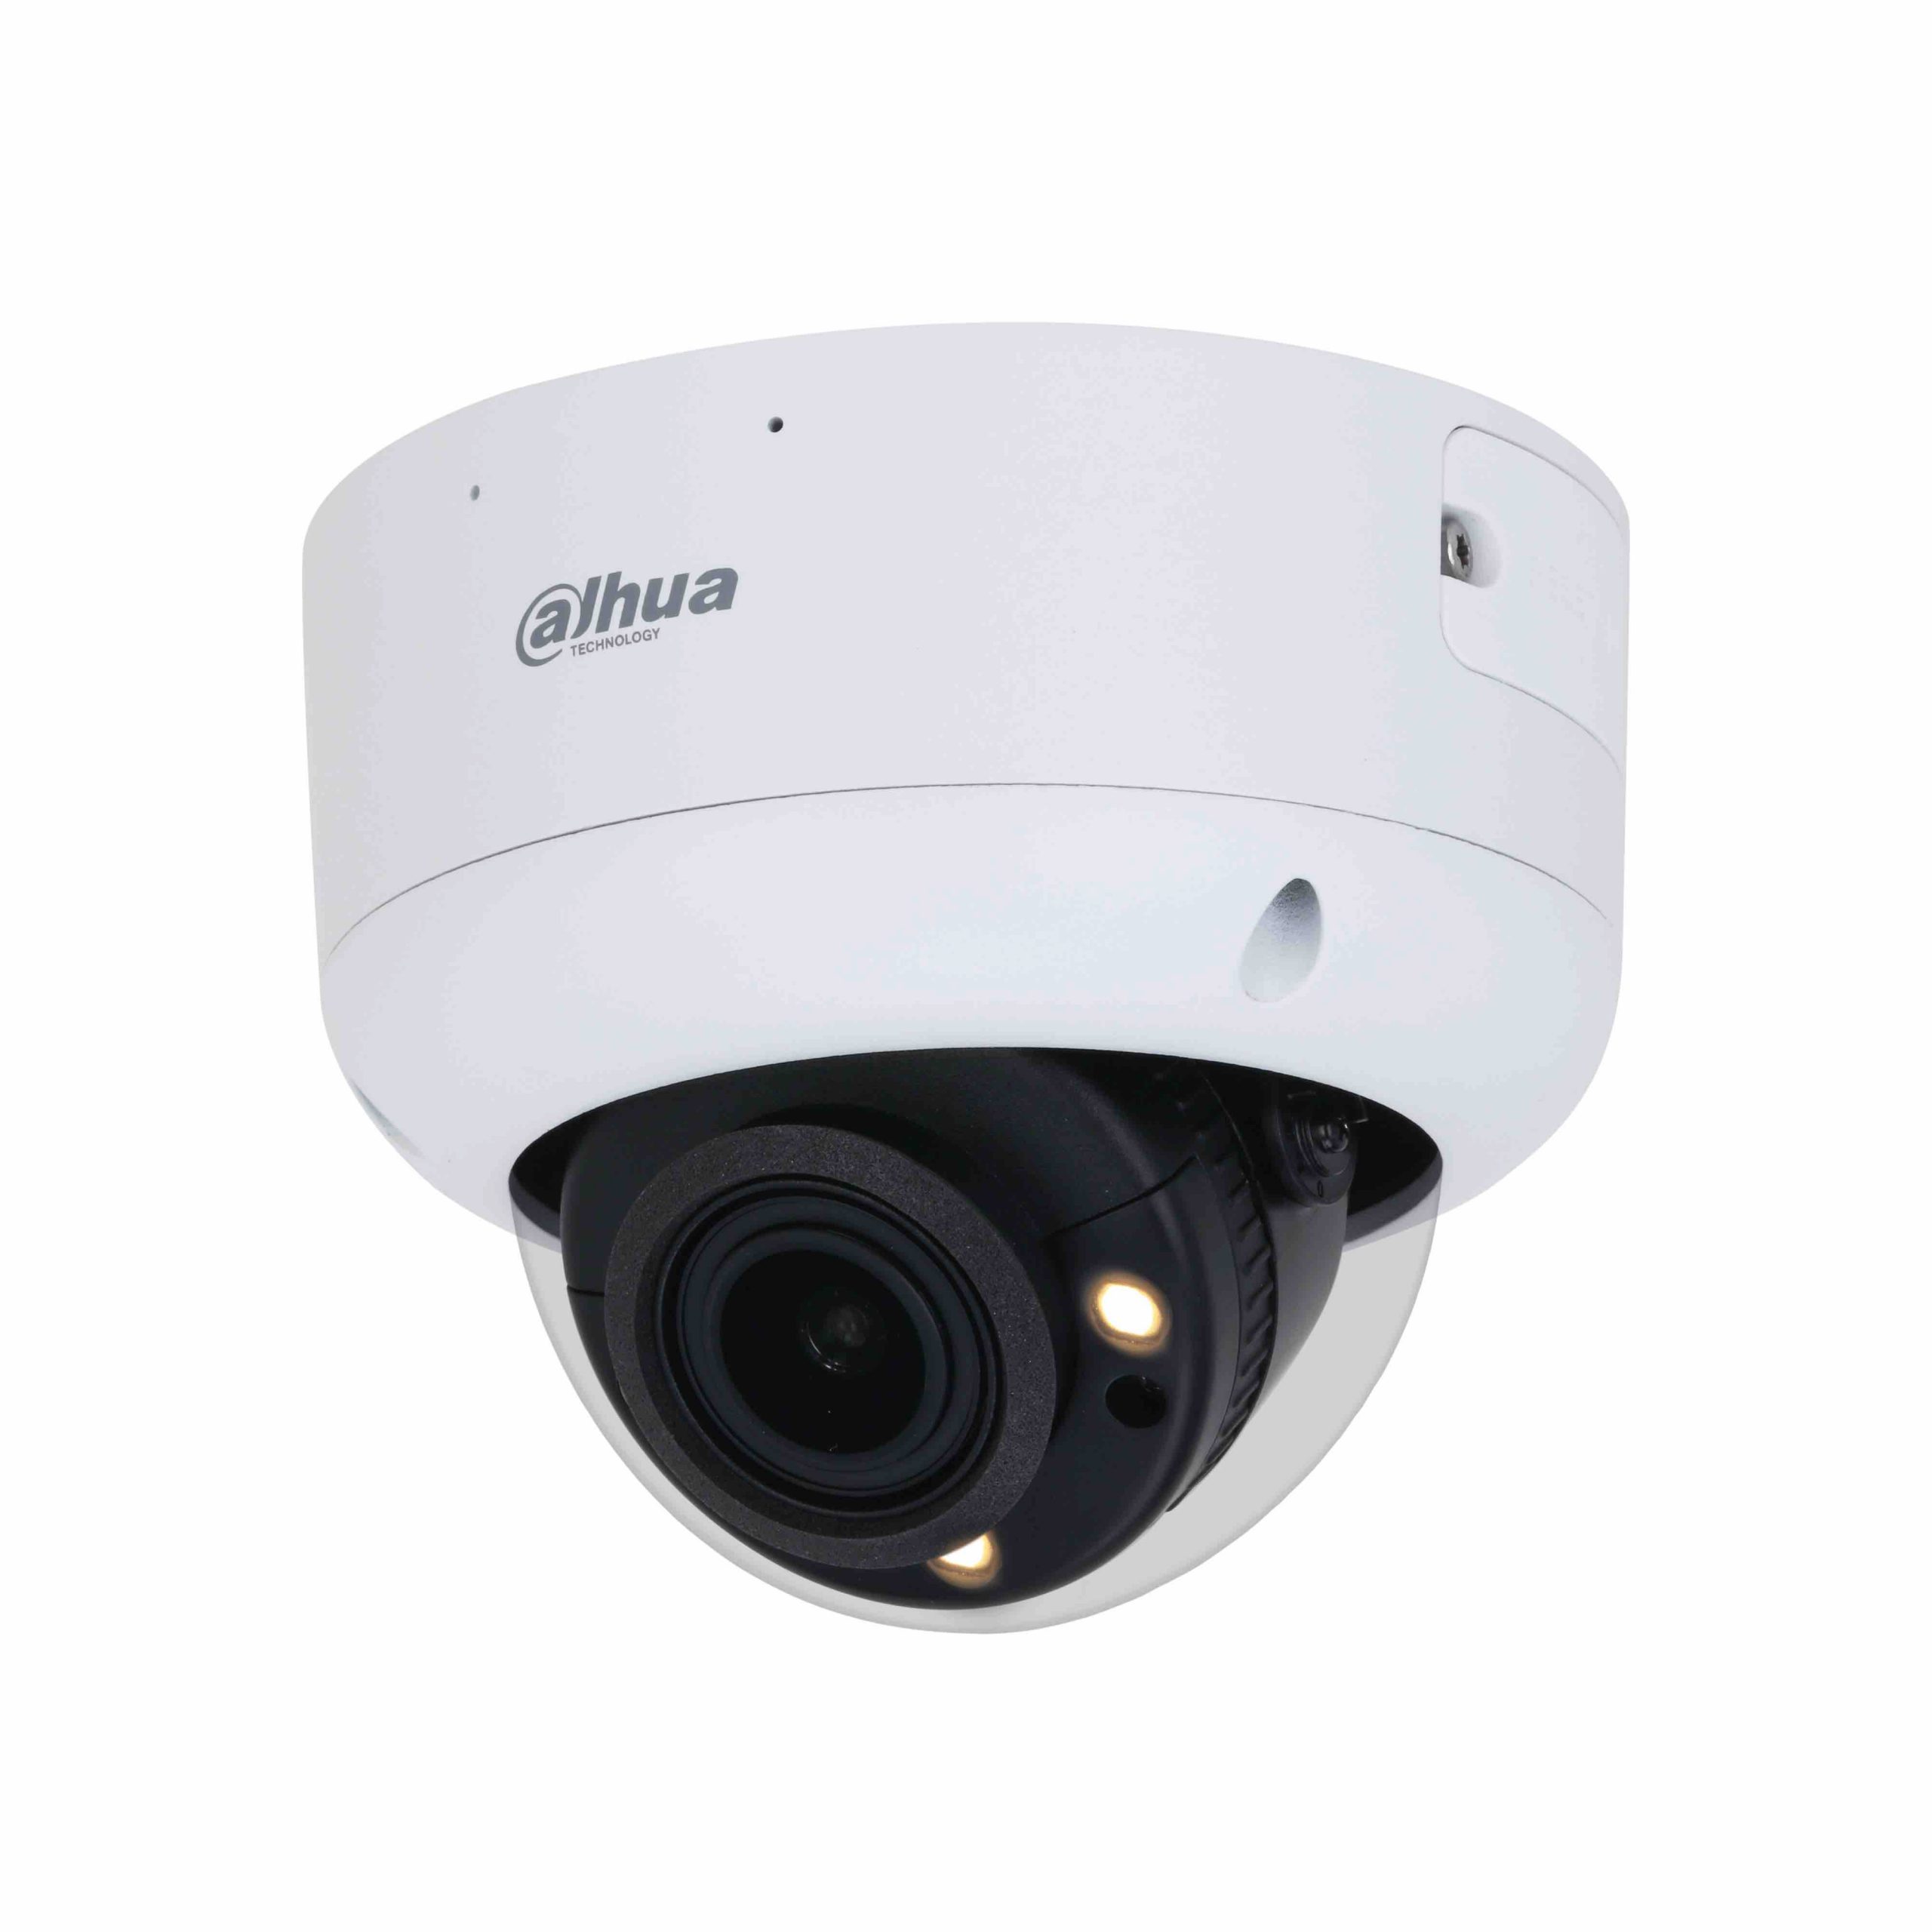 Dahua telecamere IP Full-color 2.0